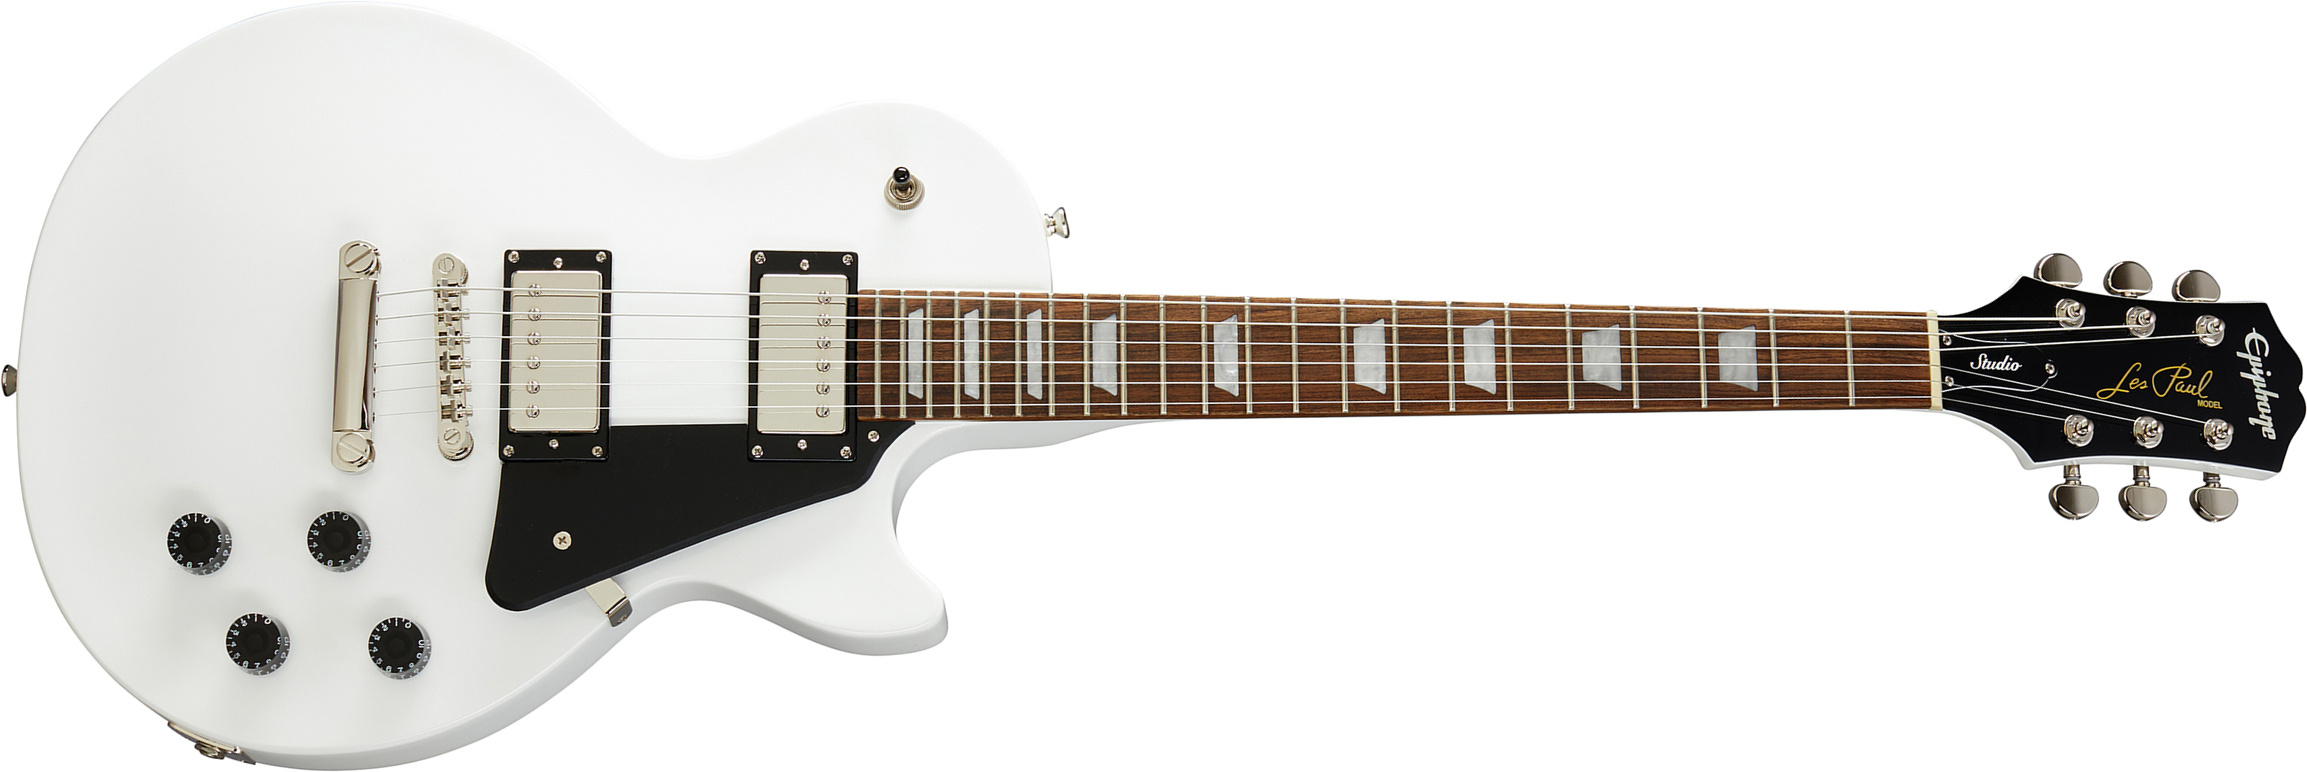 Epiphone Les Paul Studio 2h Ht Pf - Alpine White - Single cut electric guitar - Main picture